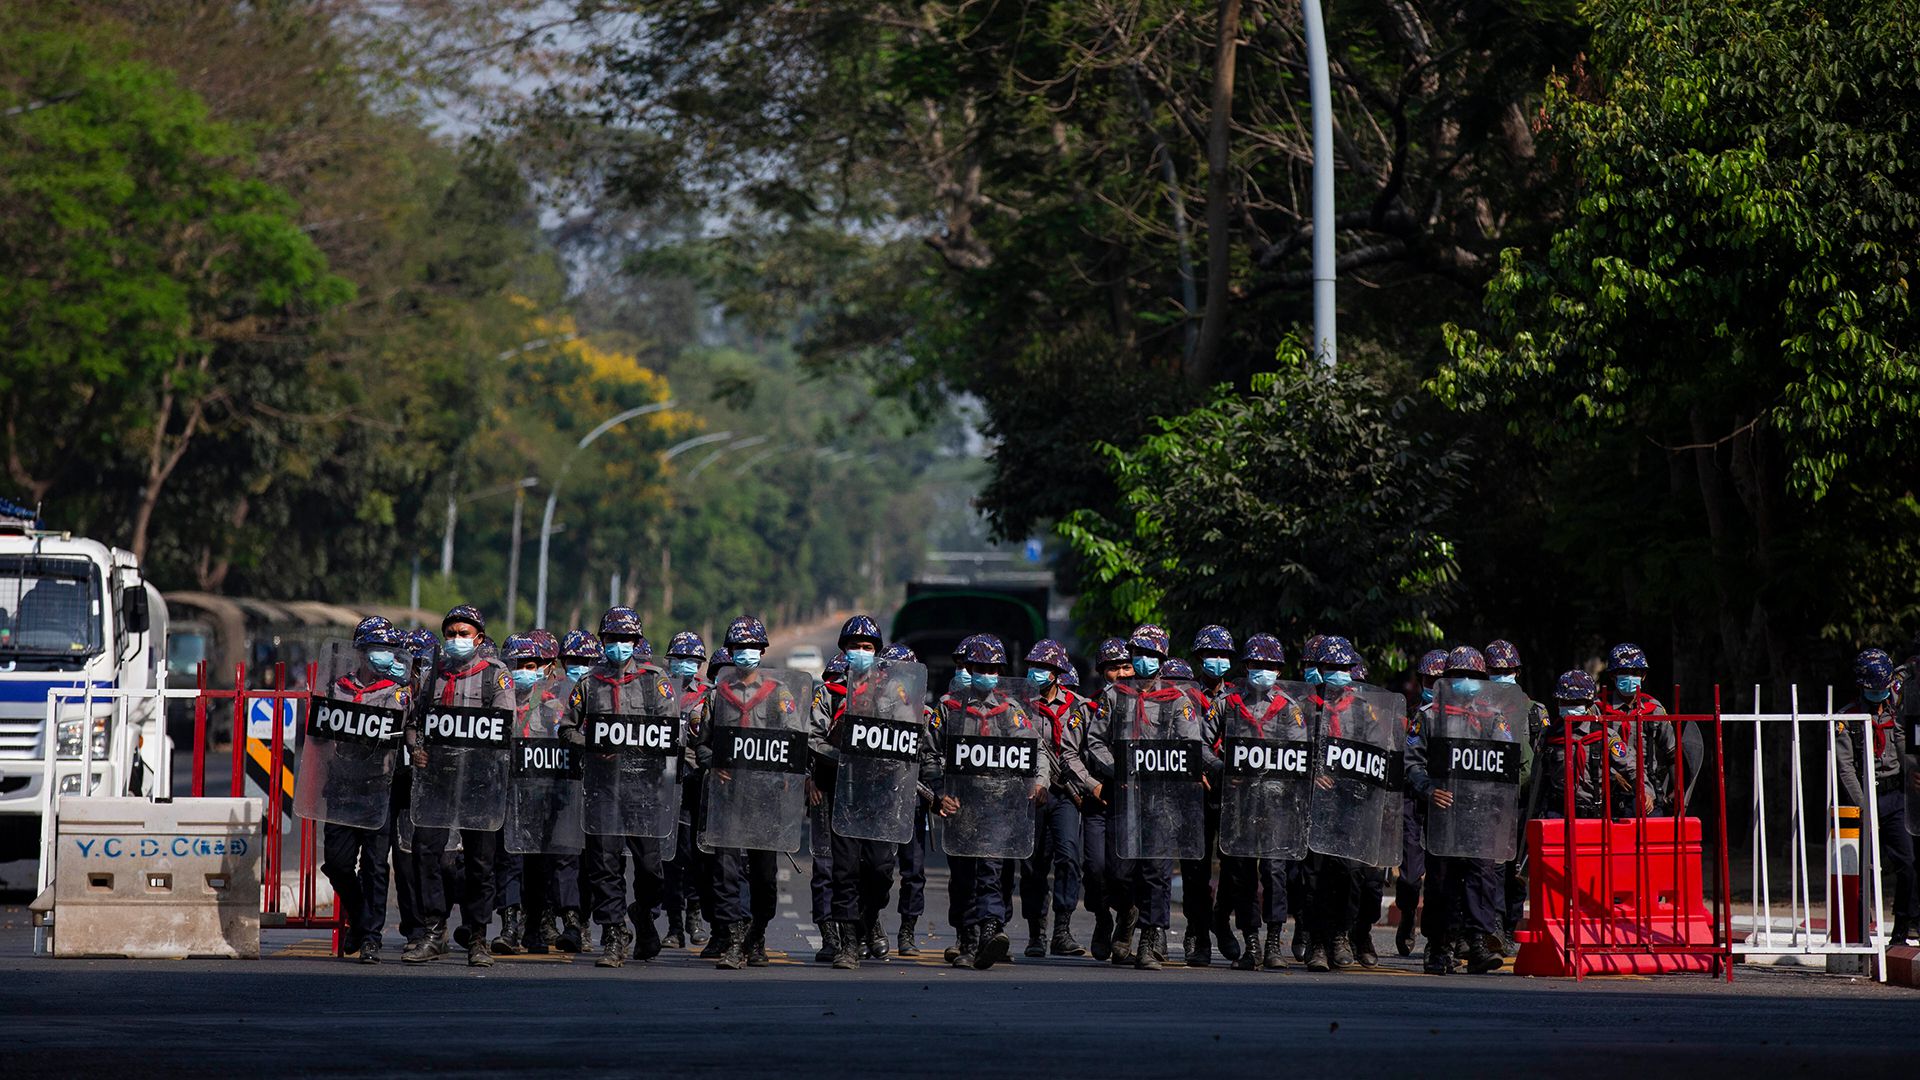 Junta in Myanmar: Der fatale Irrtum der Militärs